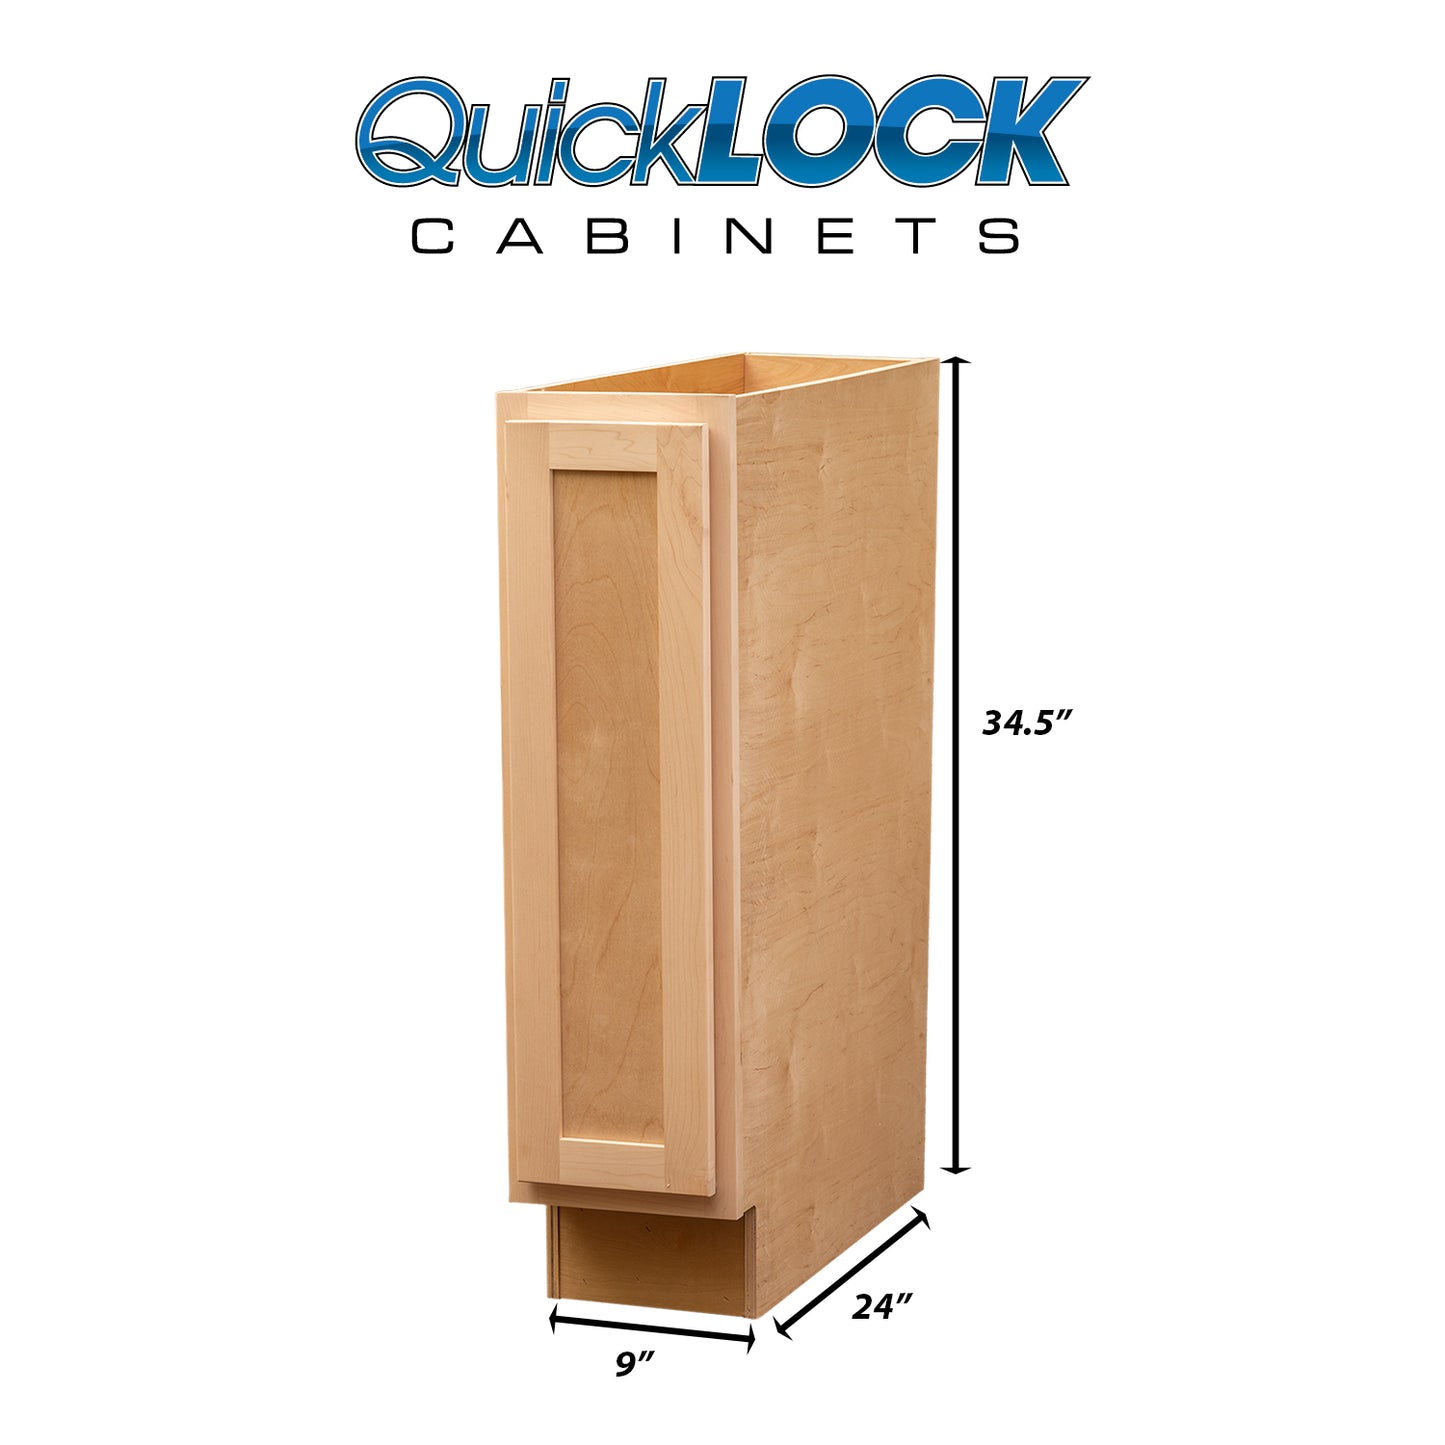 Quicklock RTA (Ready-to-Assemble) Raw Maple Base Cabinet | 9"Wx34.5"Hx24"D